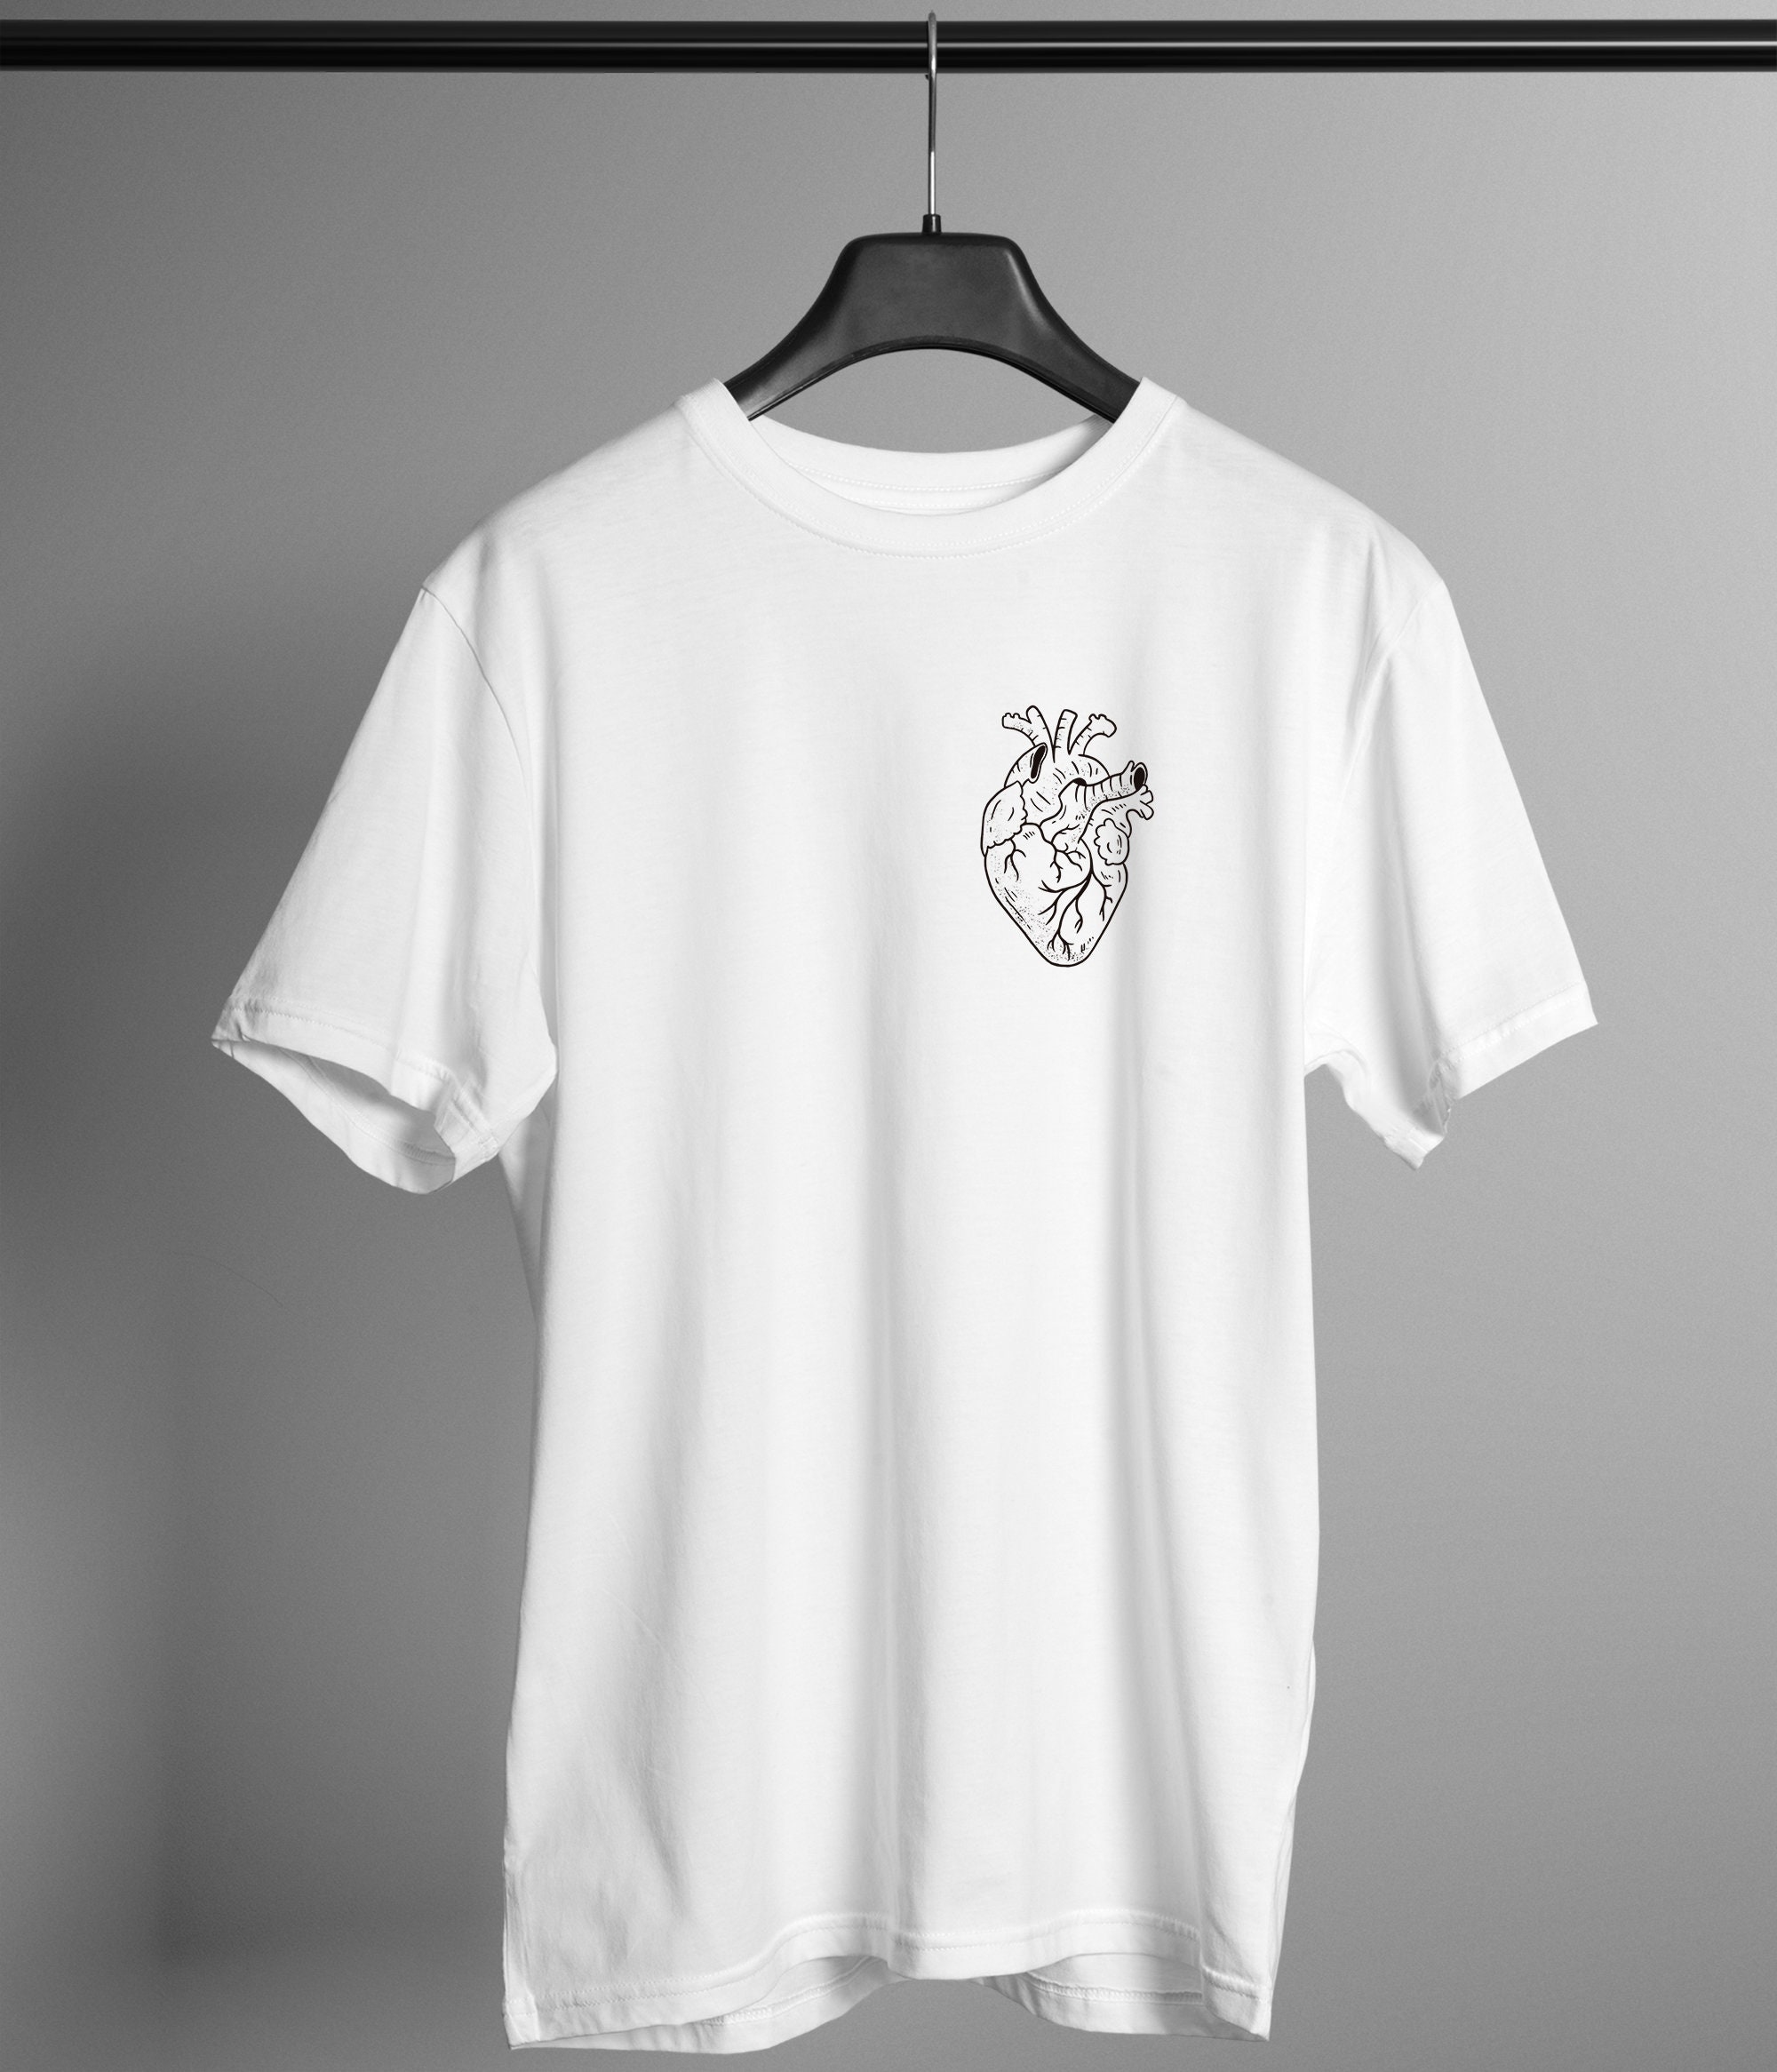 Anatomical Heart T-shirt Anatomy Medical Goth Art Design Shirt | Etsy